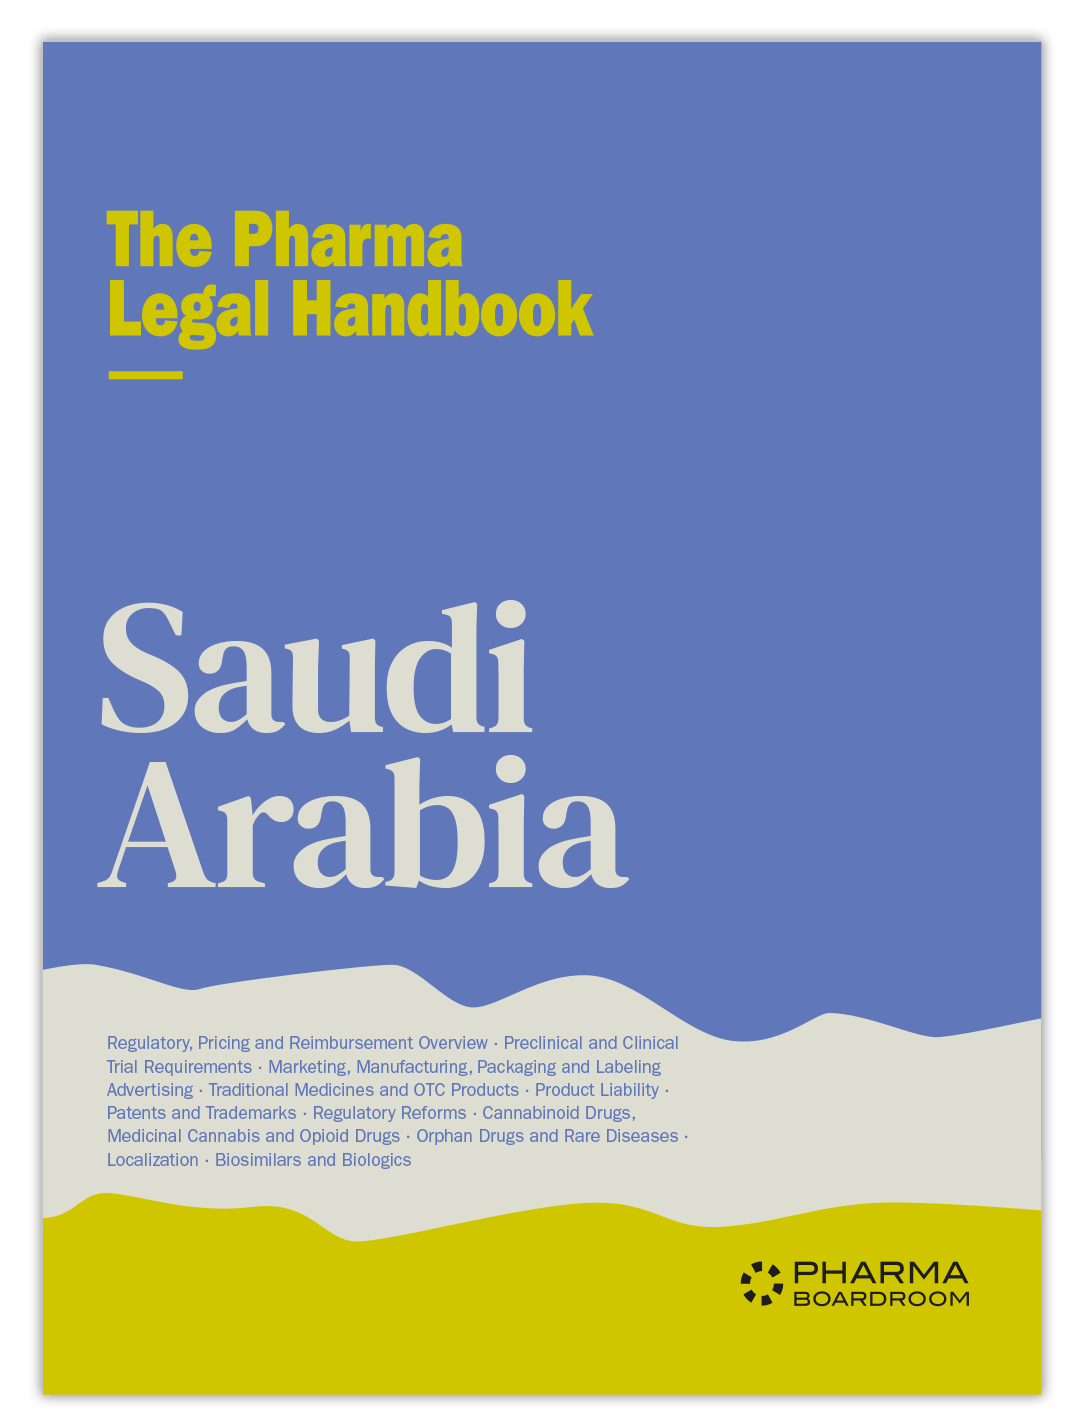 The Pharma Legal Handbook: Saudi